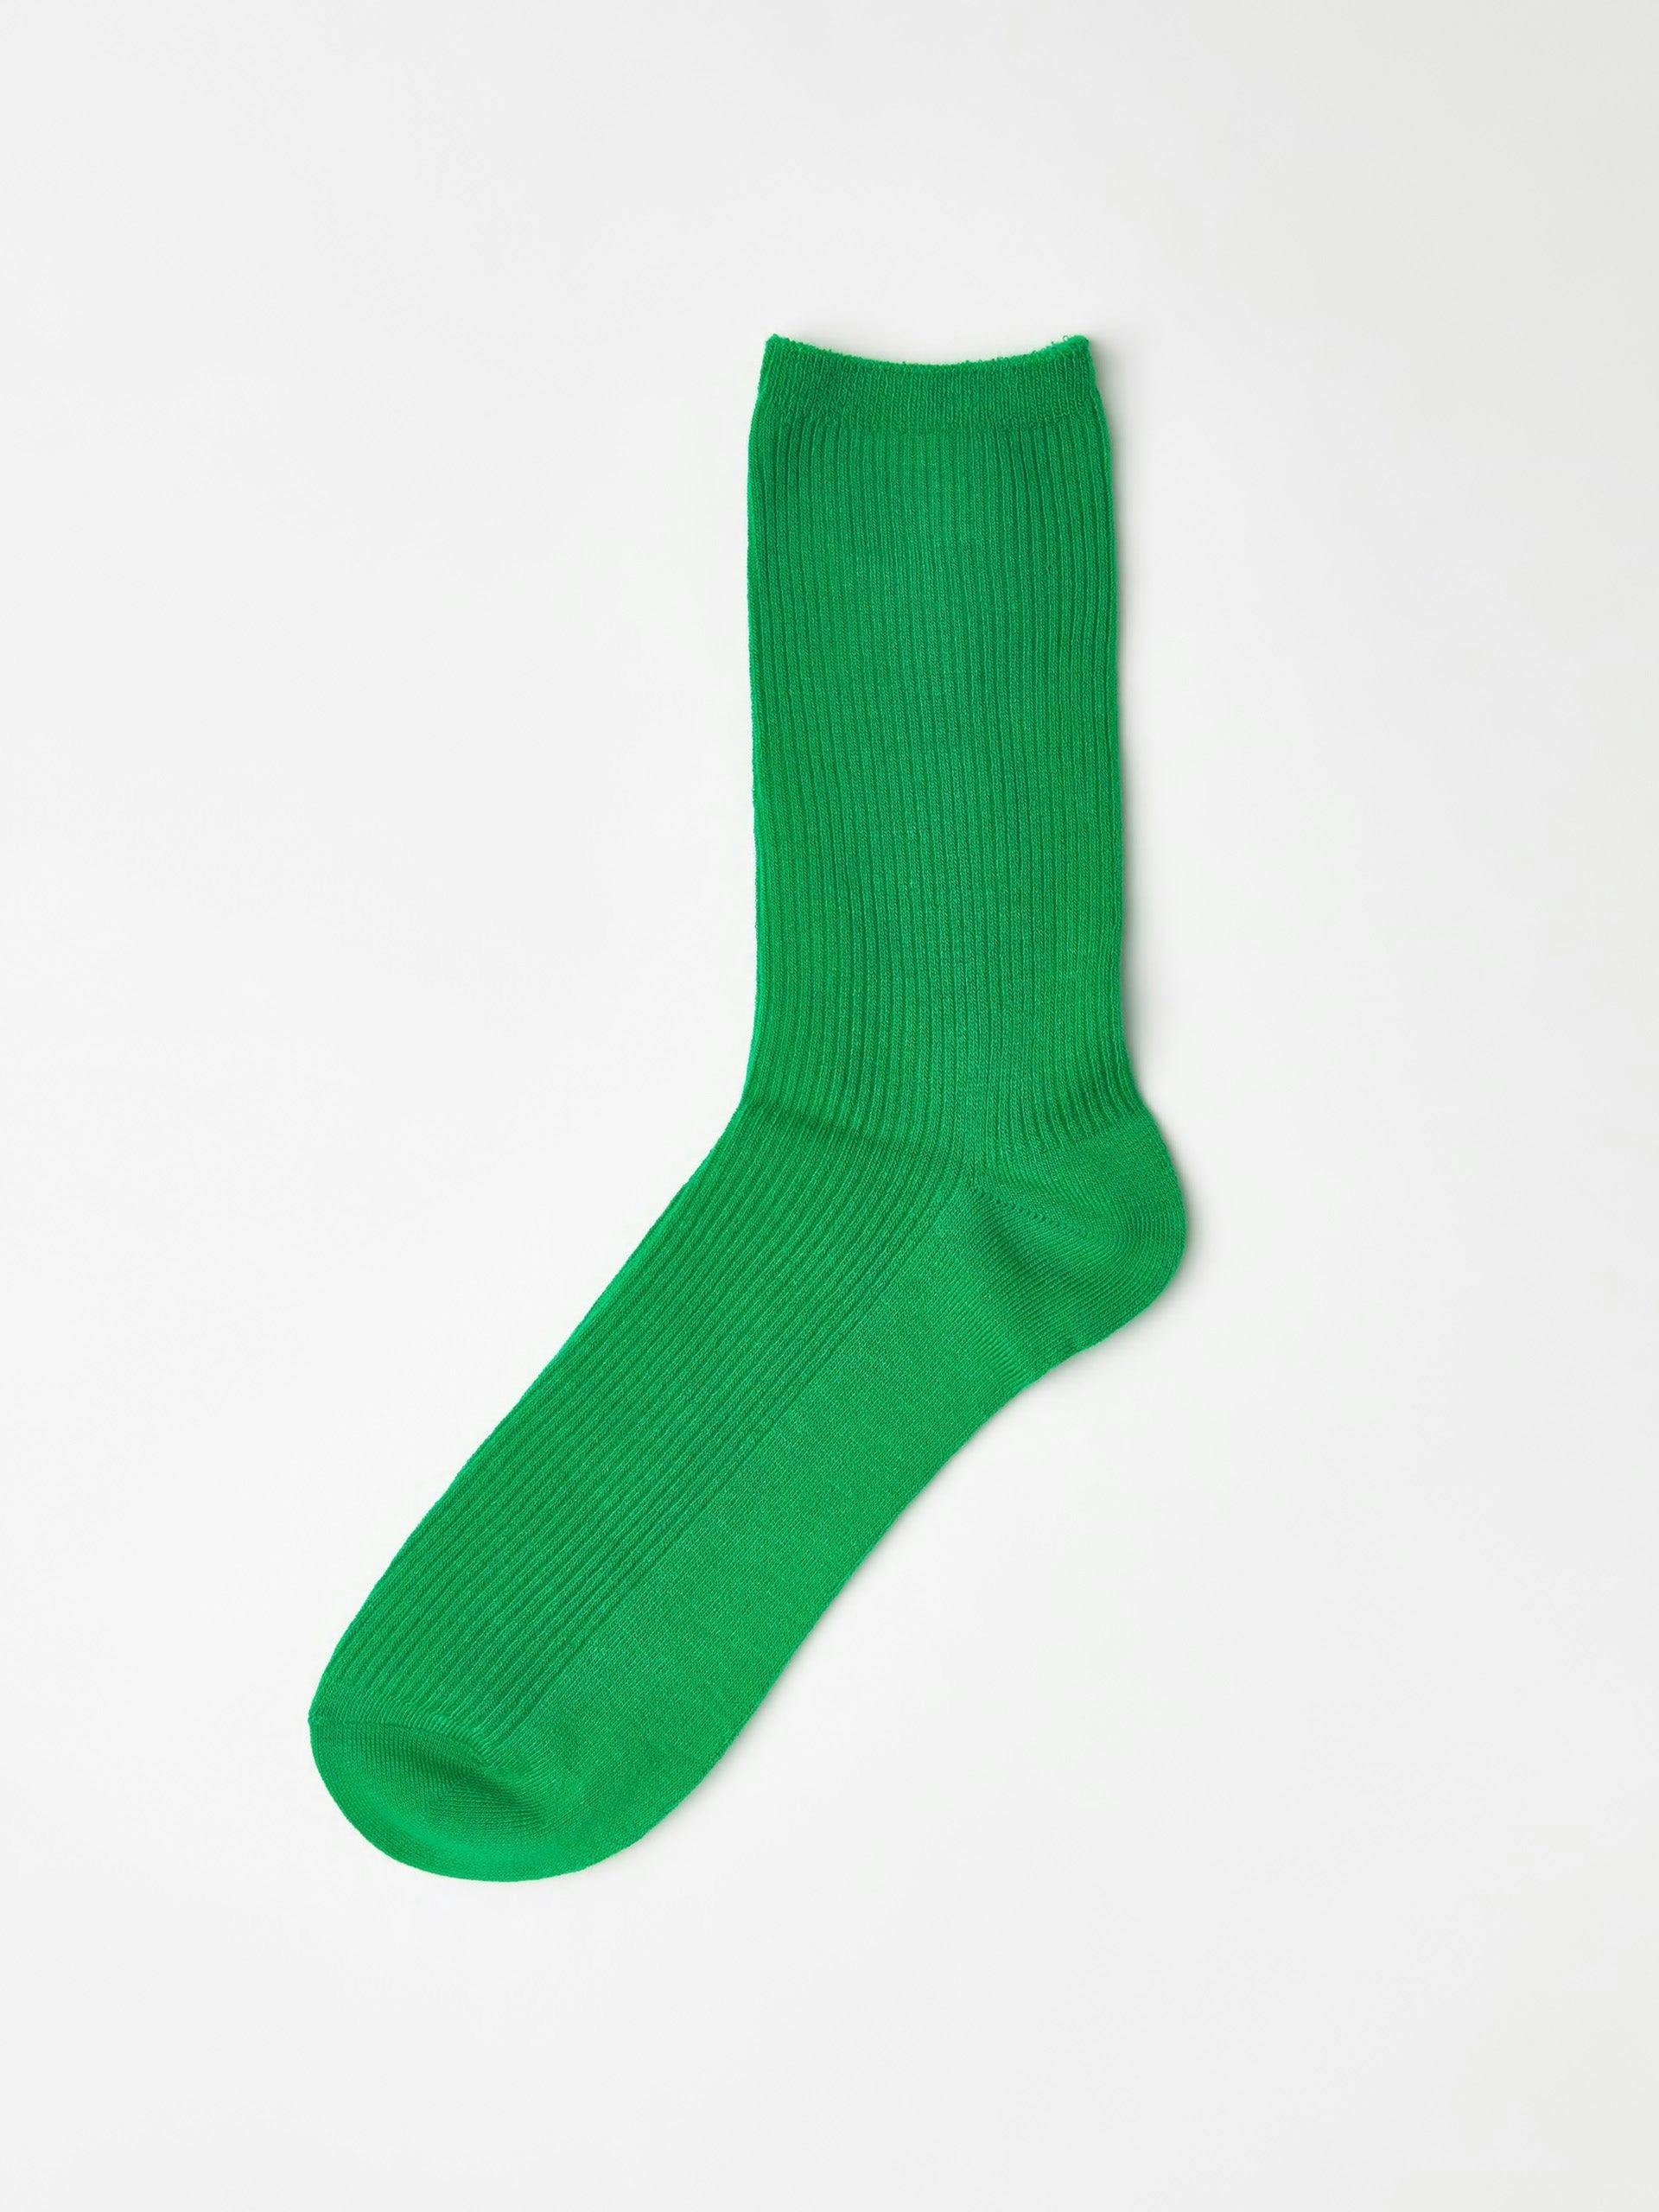 Ribbed green socks